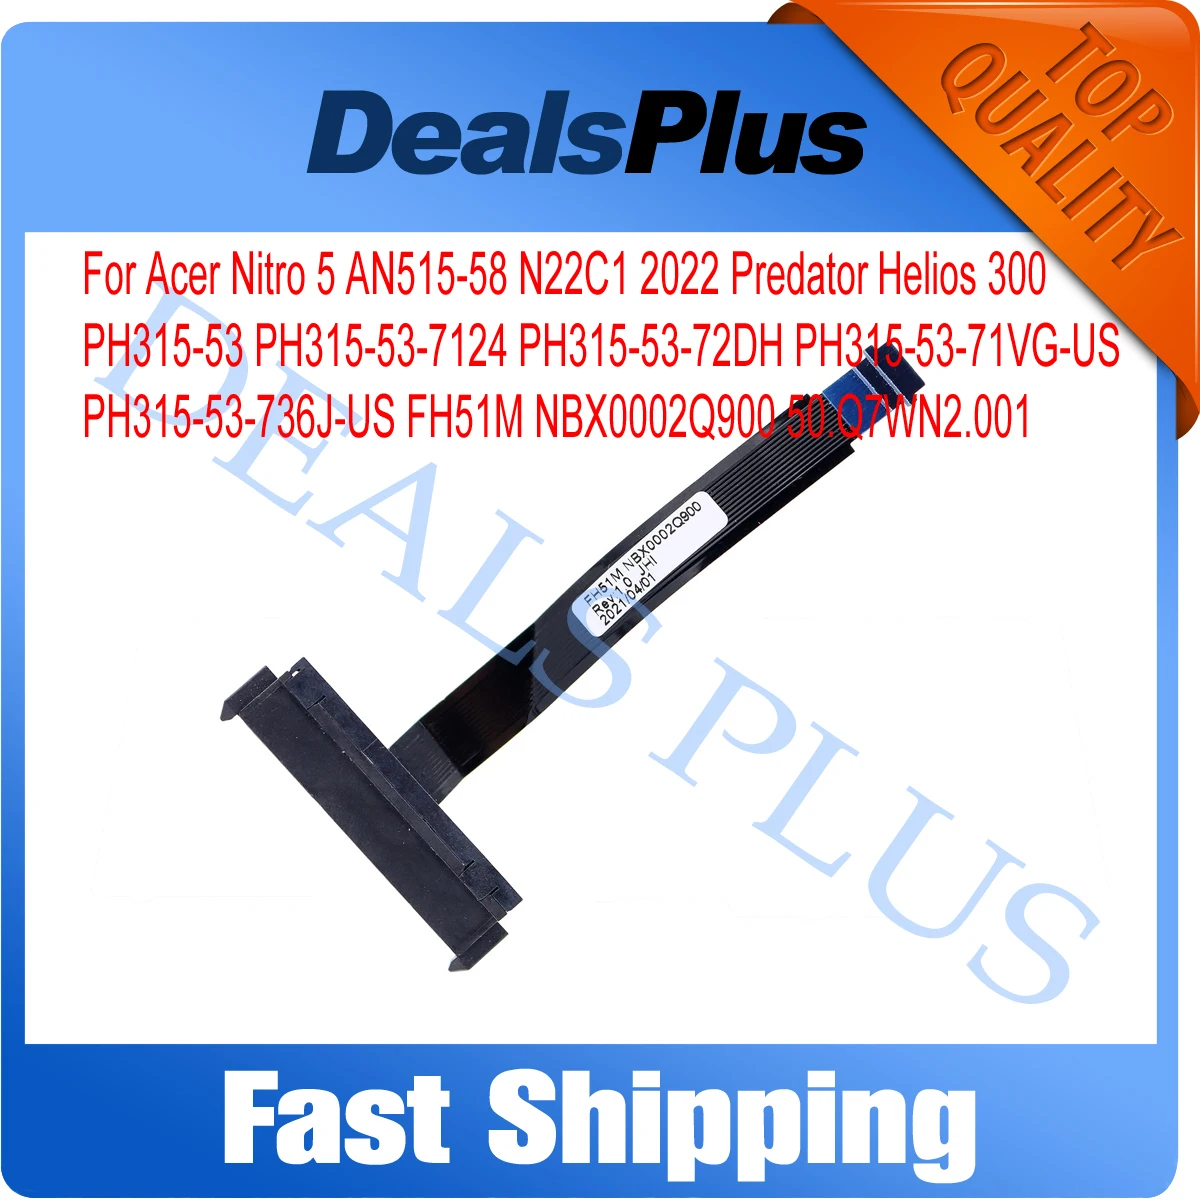 Yeni SATA HDD Sabit Sürücü Kablosu Acer Nitro 5 AN515-58 N22C1 2022 Predator Helios 300 PH315-53 Serisi NBX0002Q900 Görüntü 0